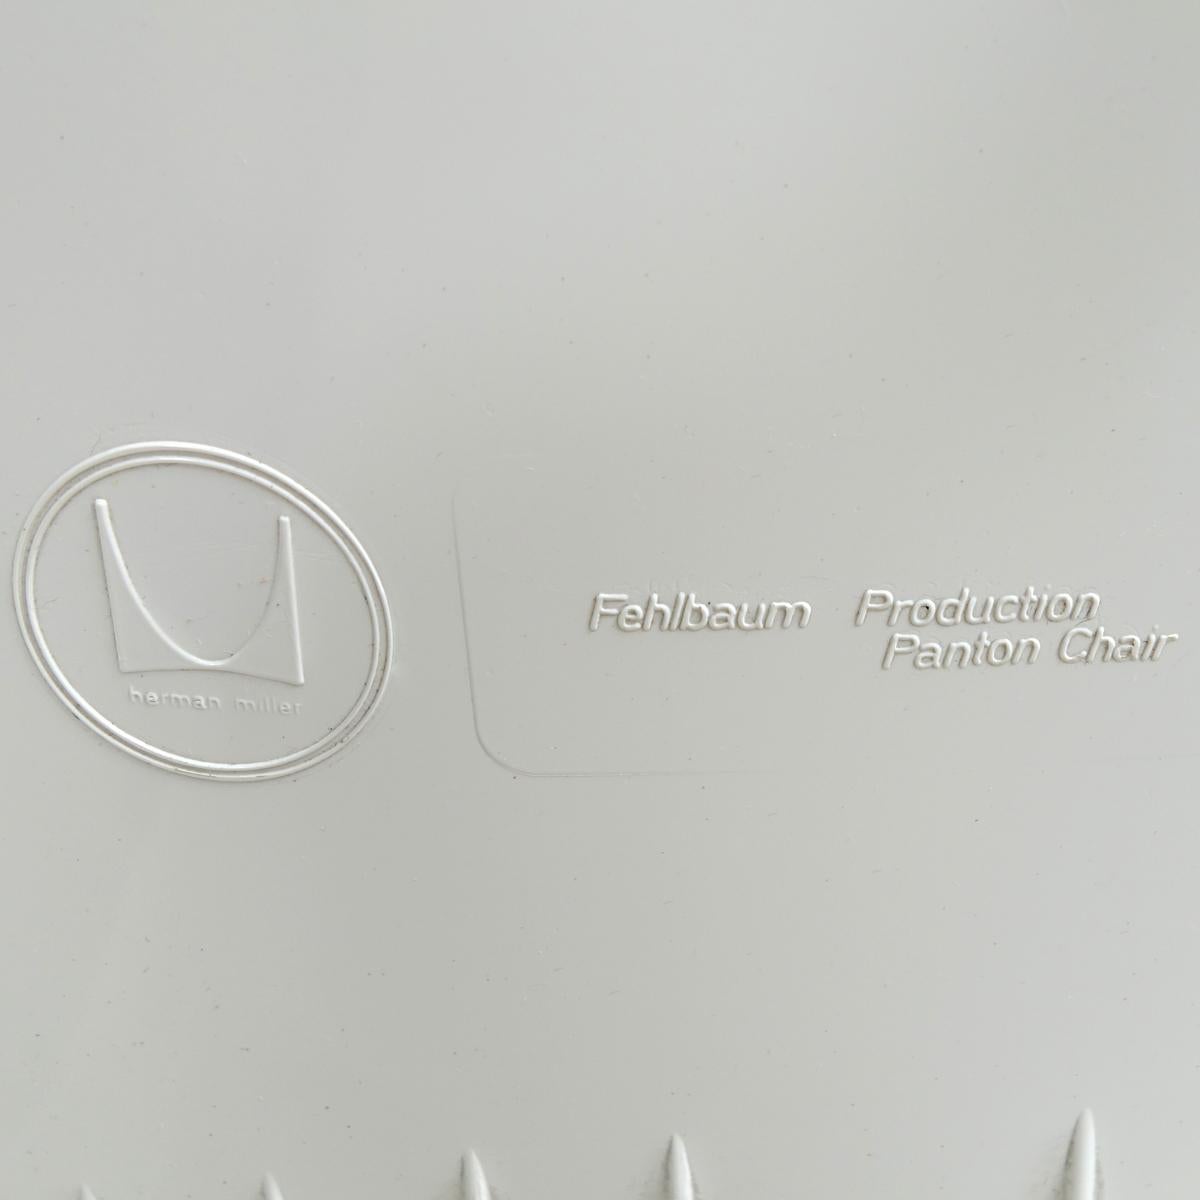 Gloss White Panton S-Stuhl von Verner Panton / Herman Miller Fehlbaum Production im Angebot 2